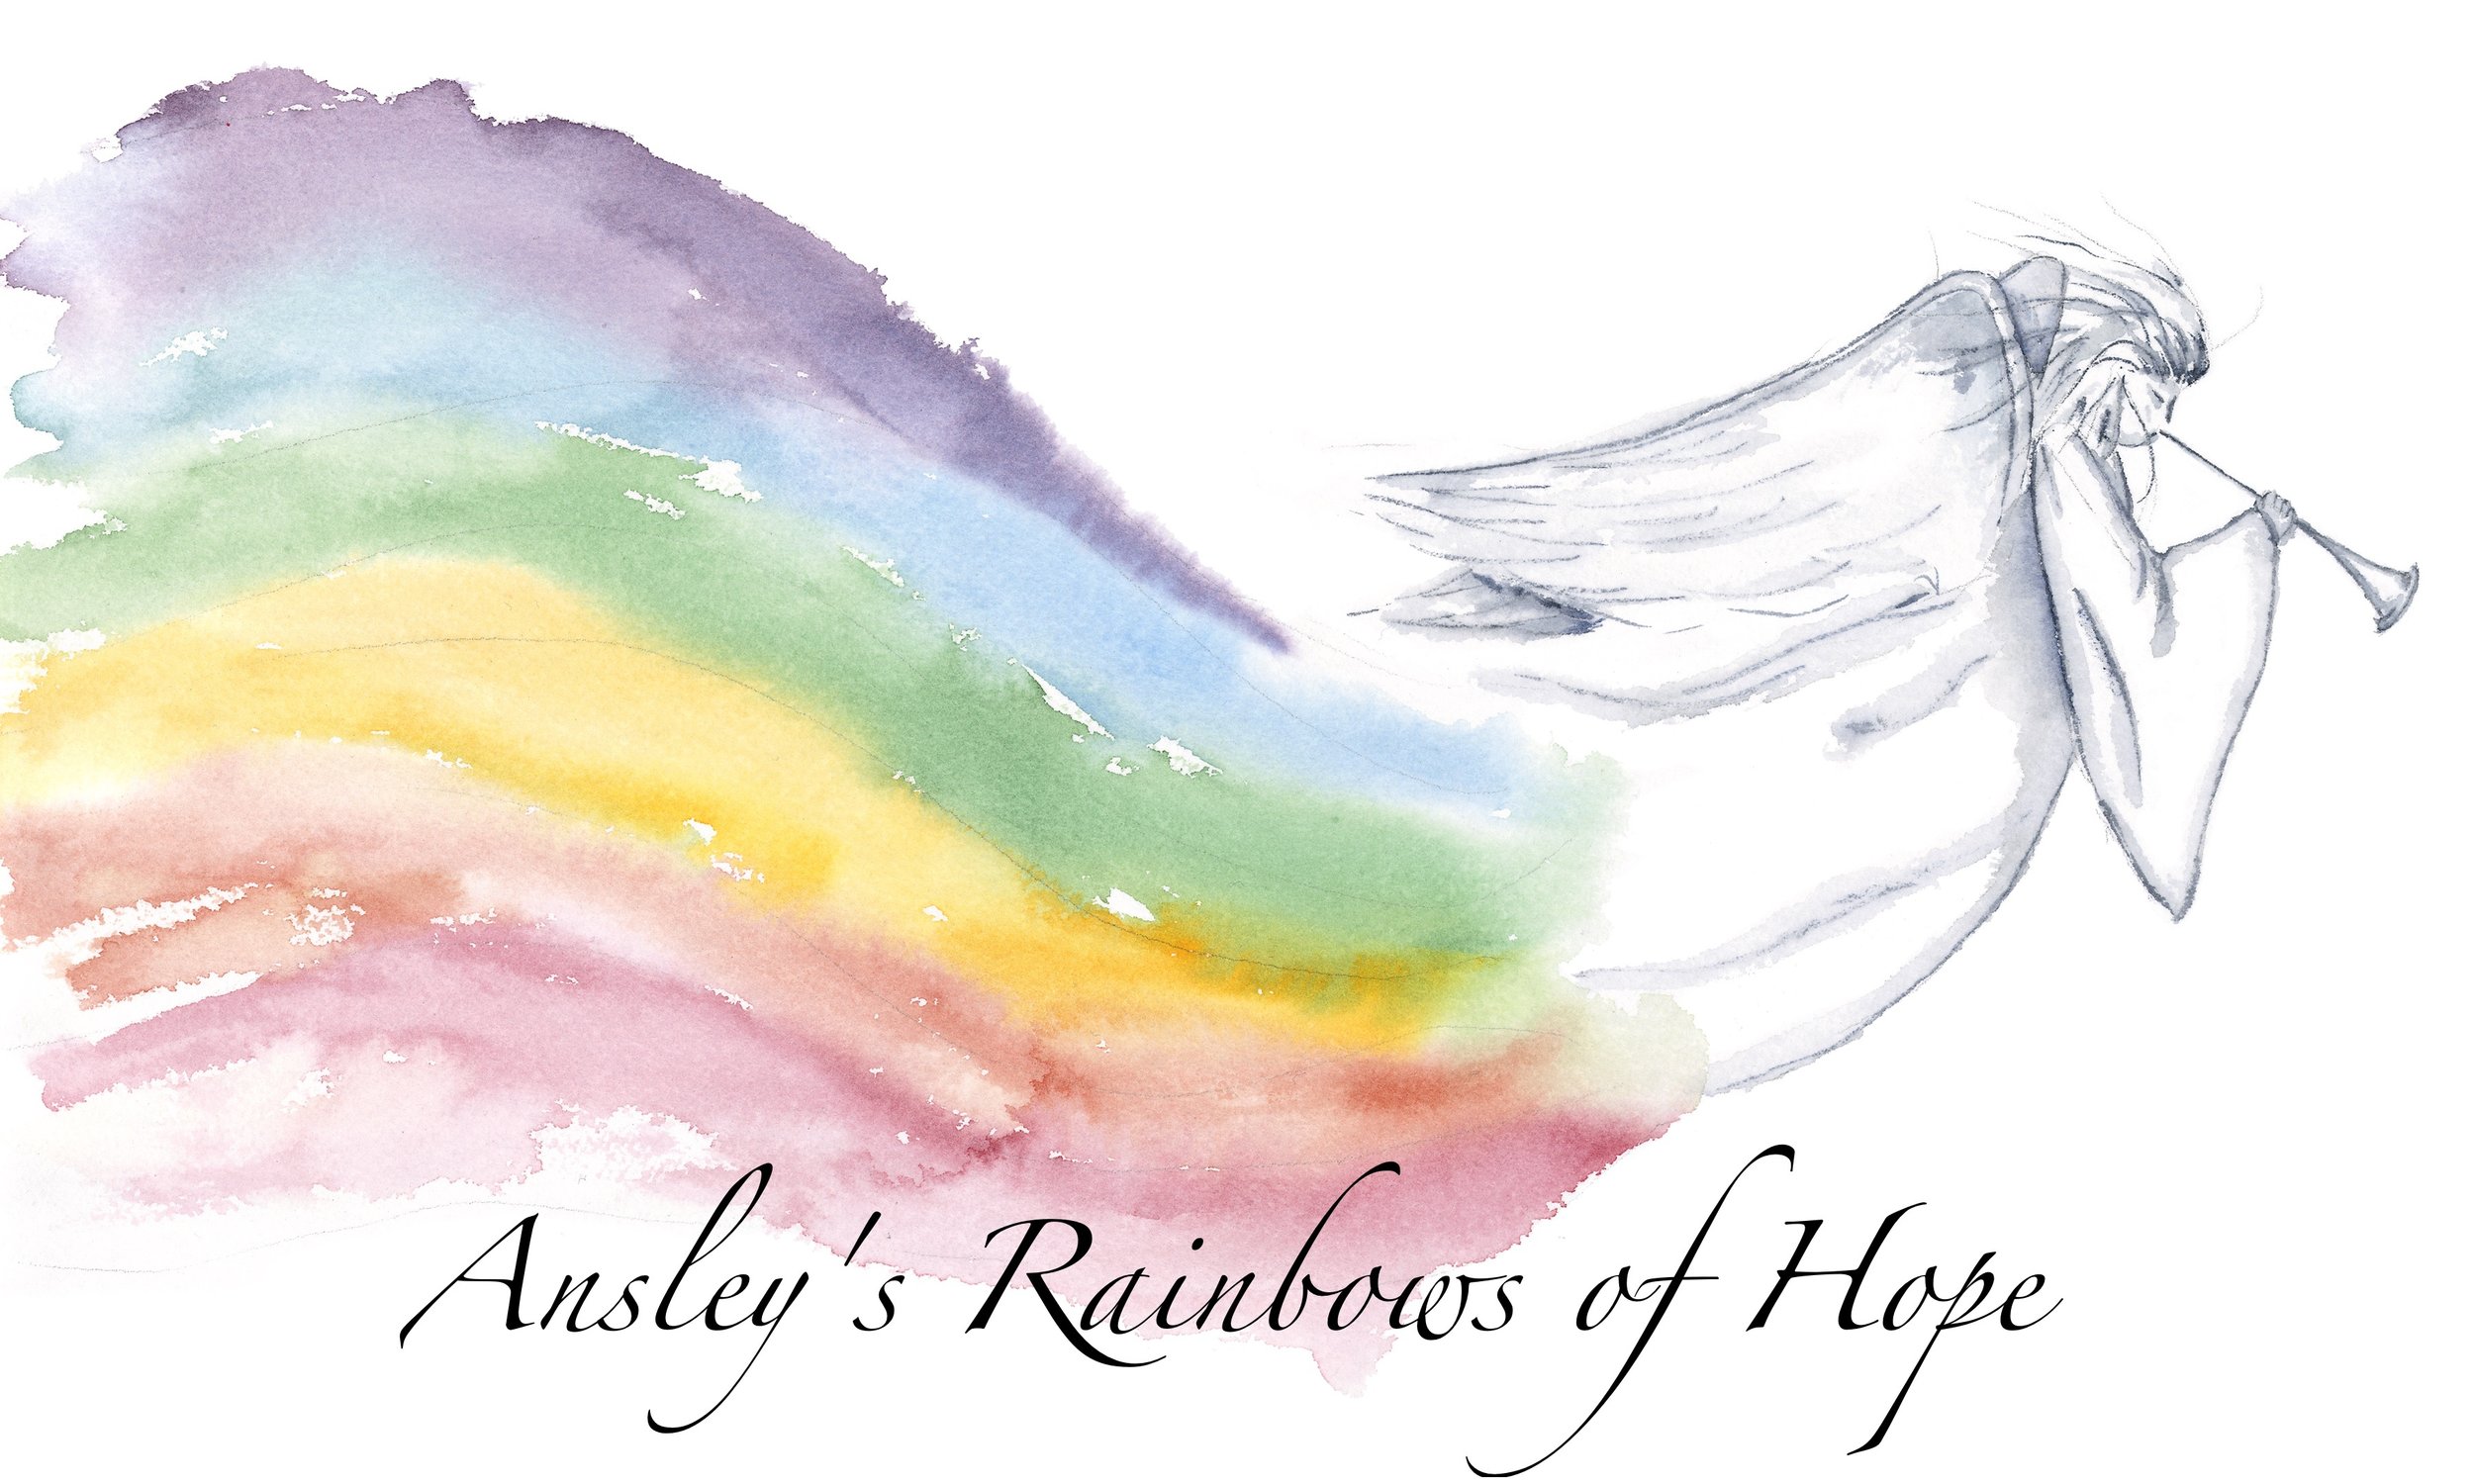 Ansley’s Rainbows of Hope